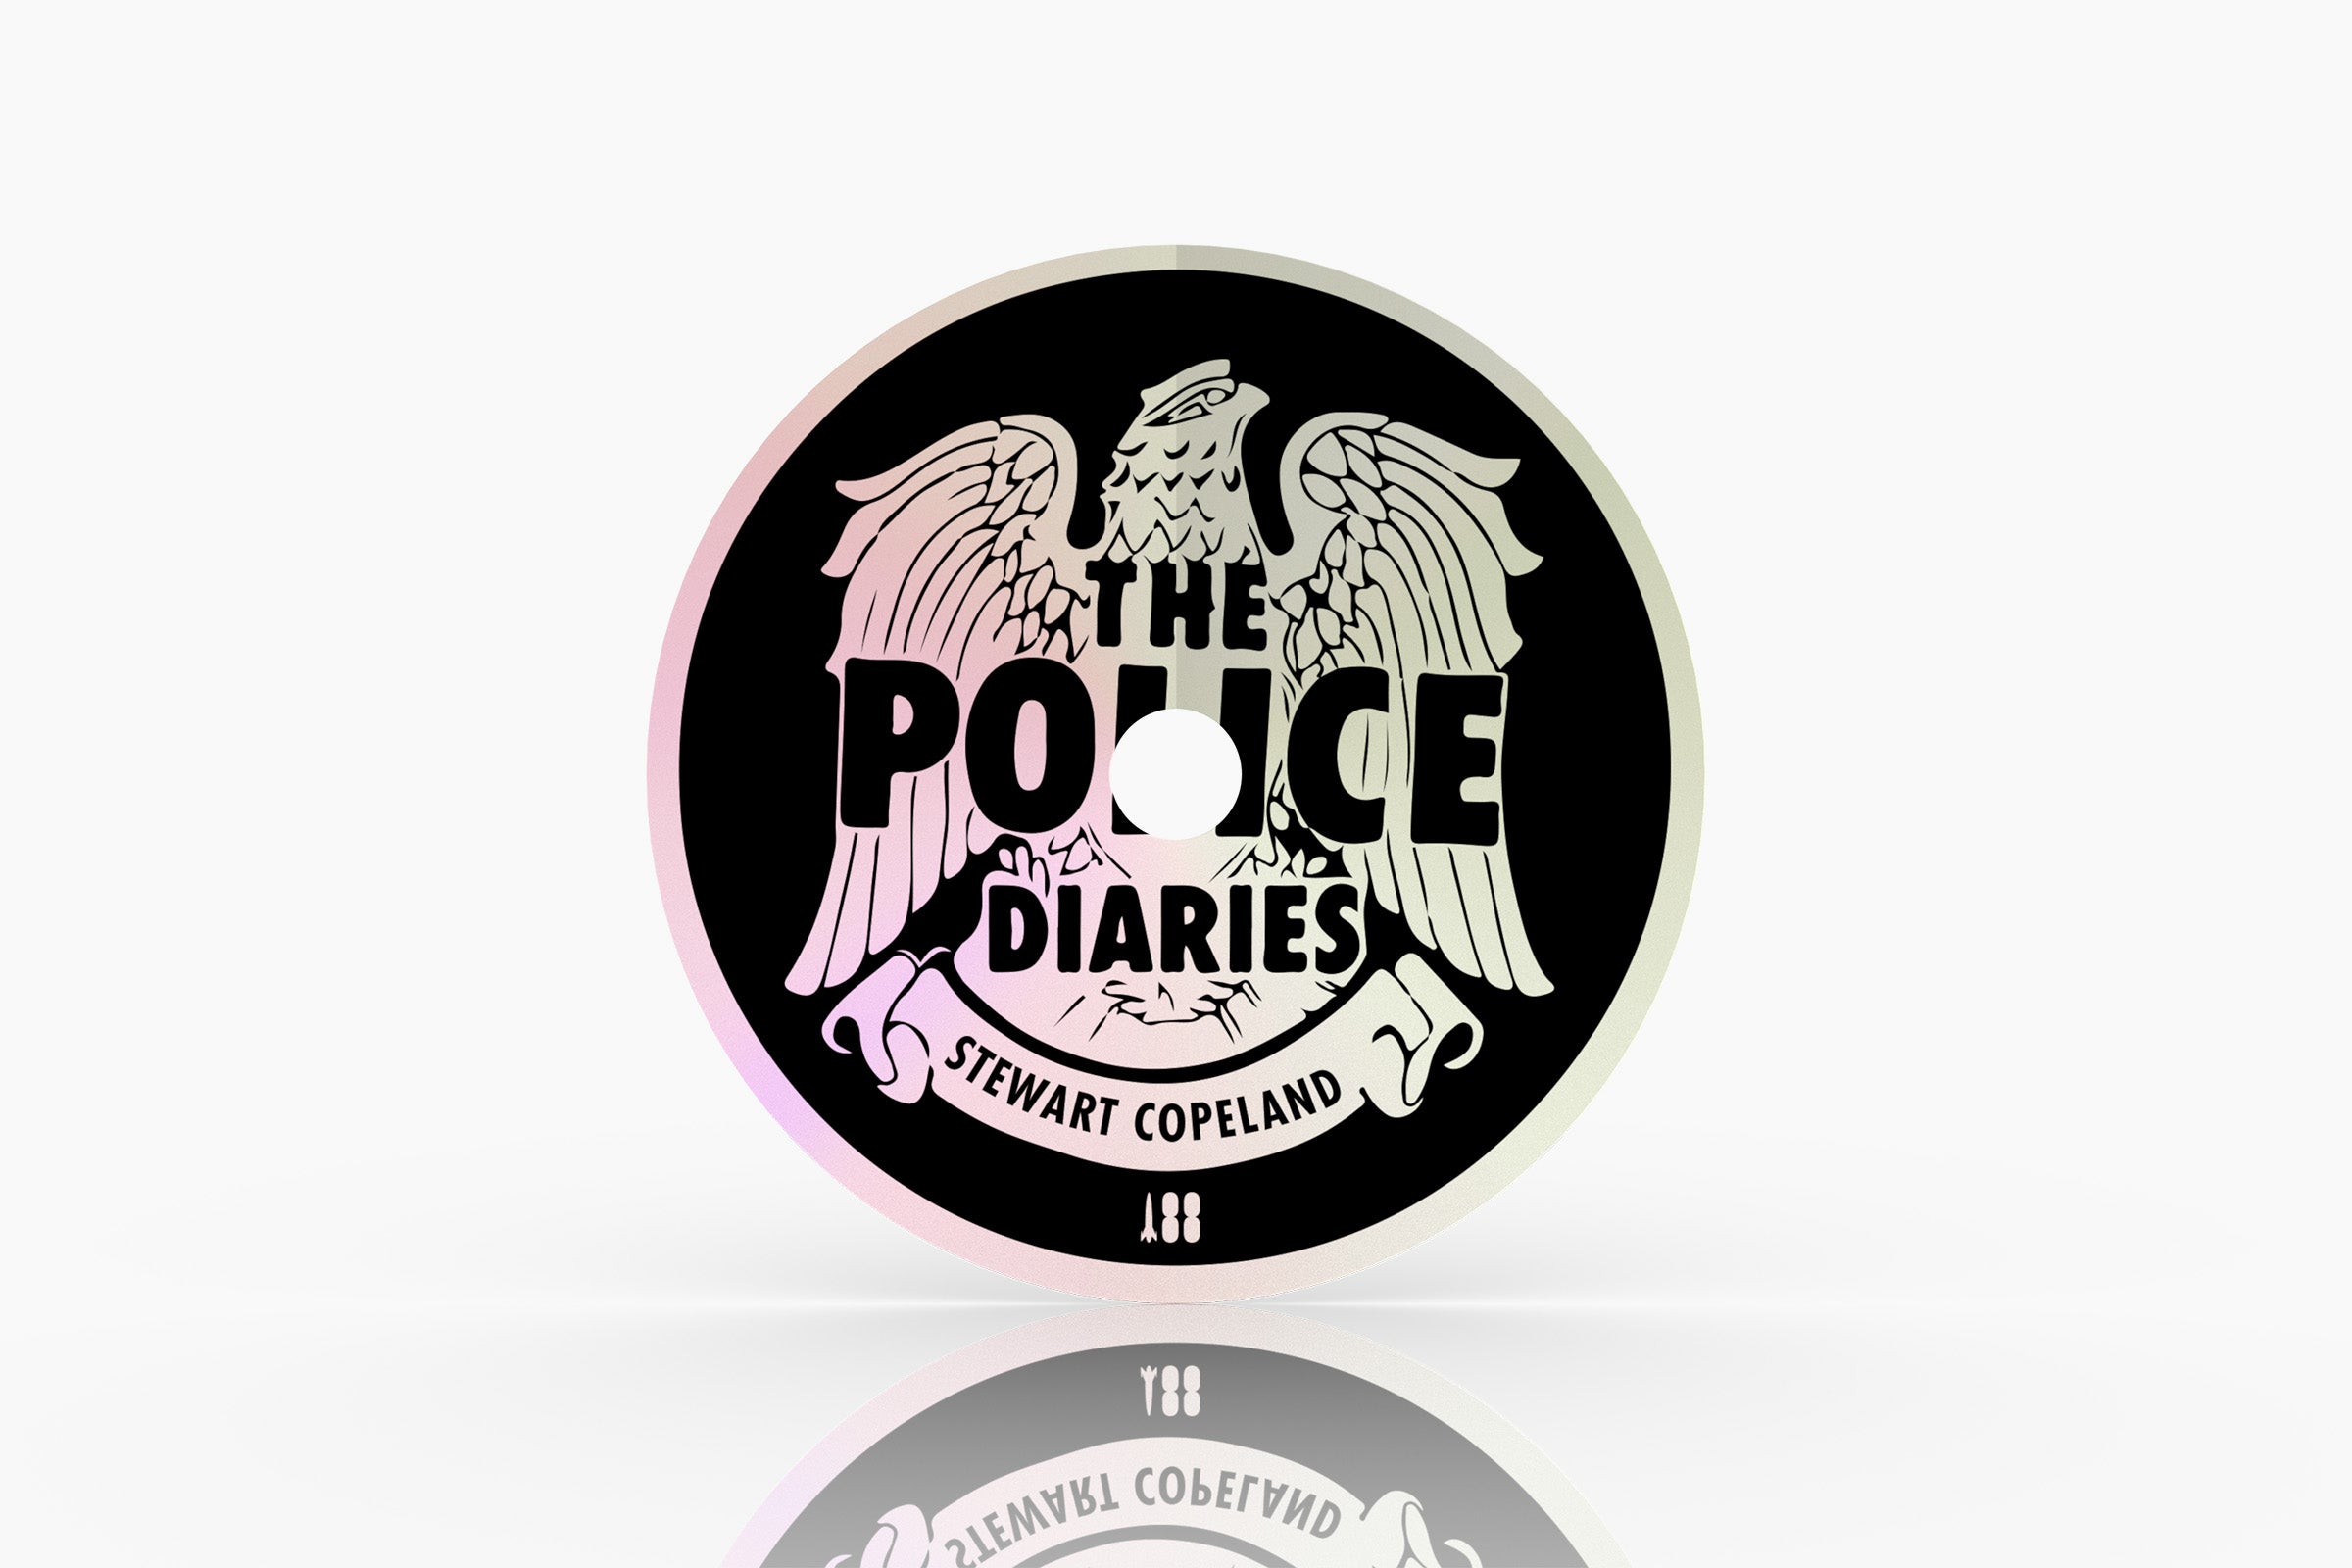 Stewart Copeland’s Police Diaries (Signature Edition)